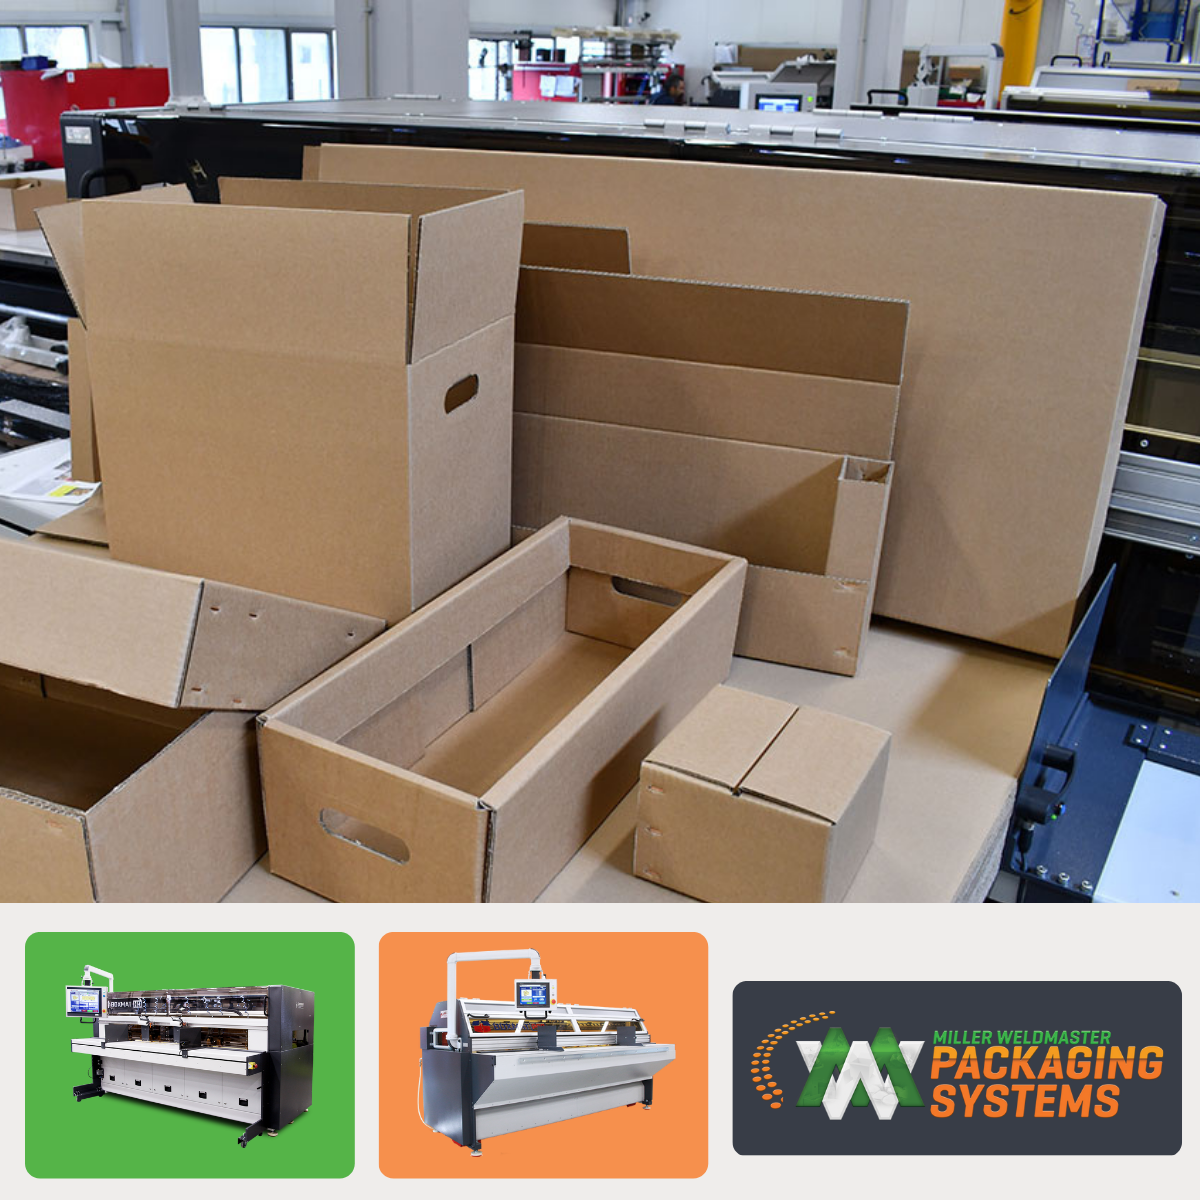 Boxmat Pro  Weldmaster Packaging